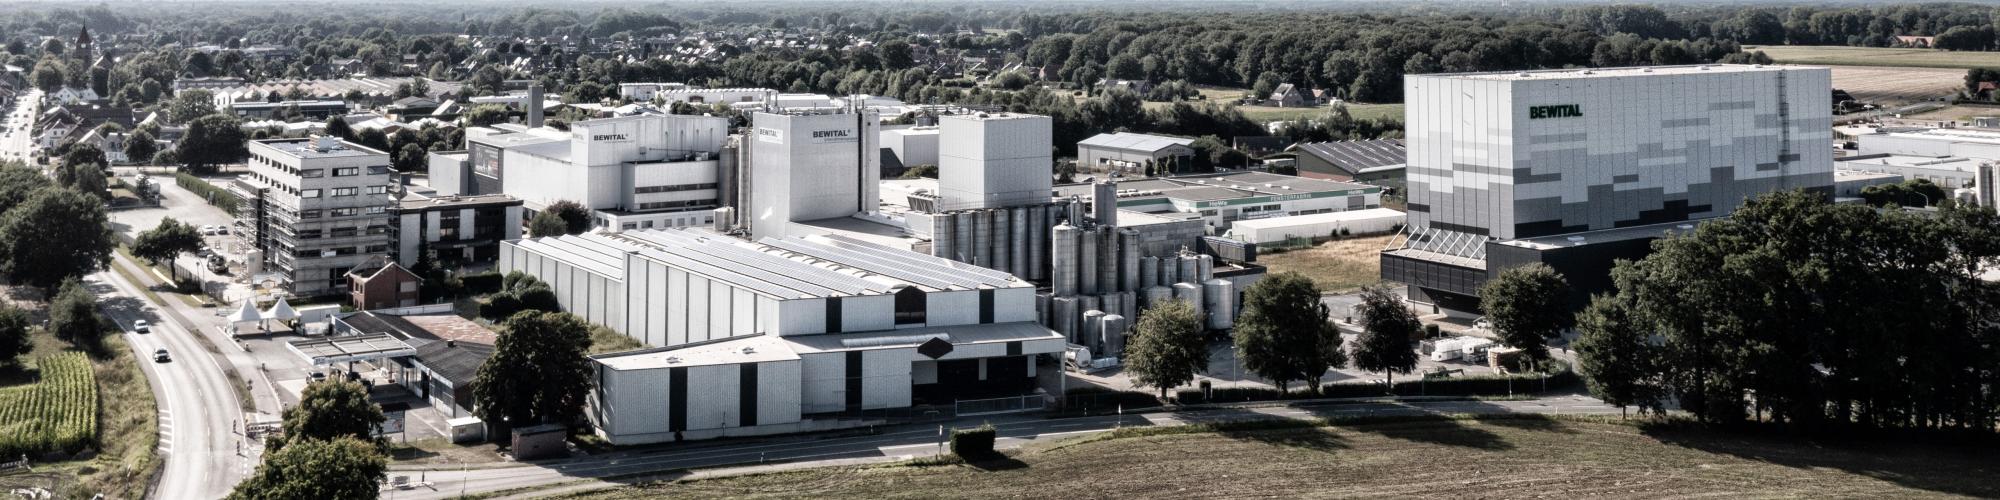 BEWITAL agri GmbH & Co. KG